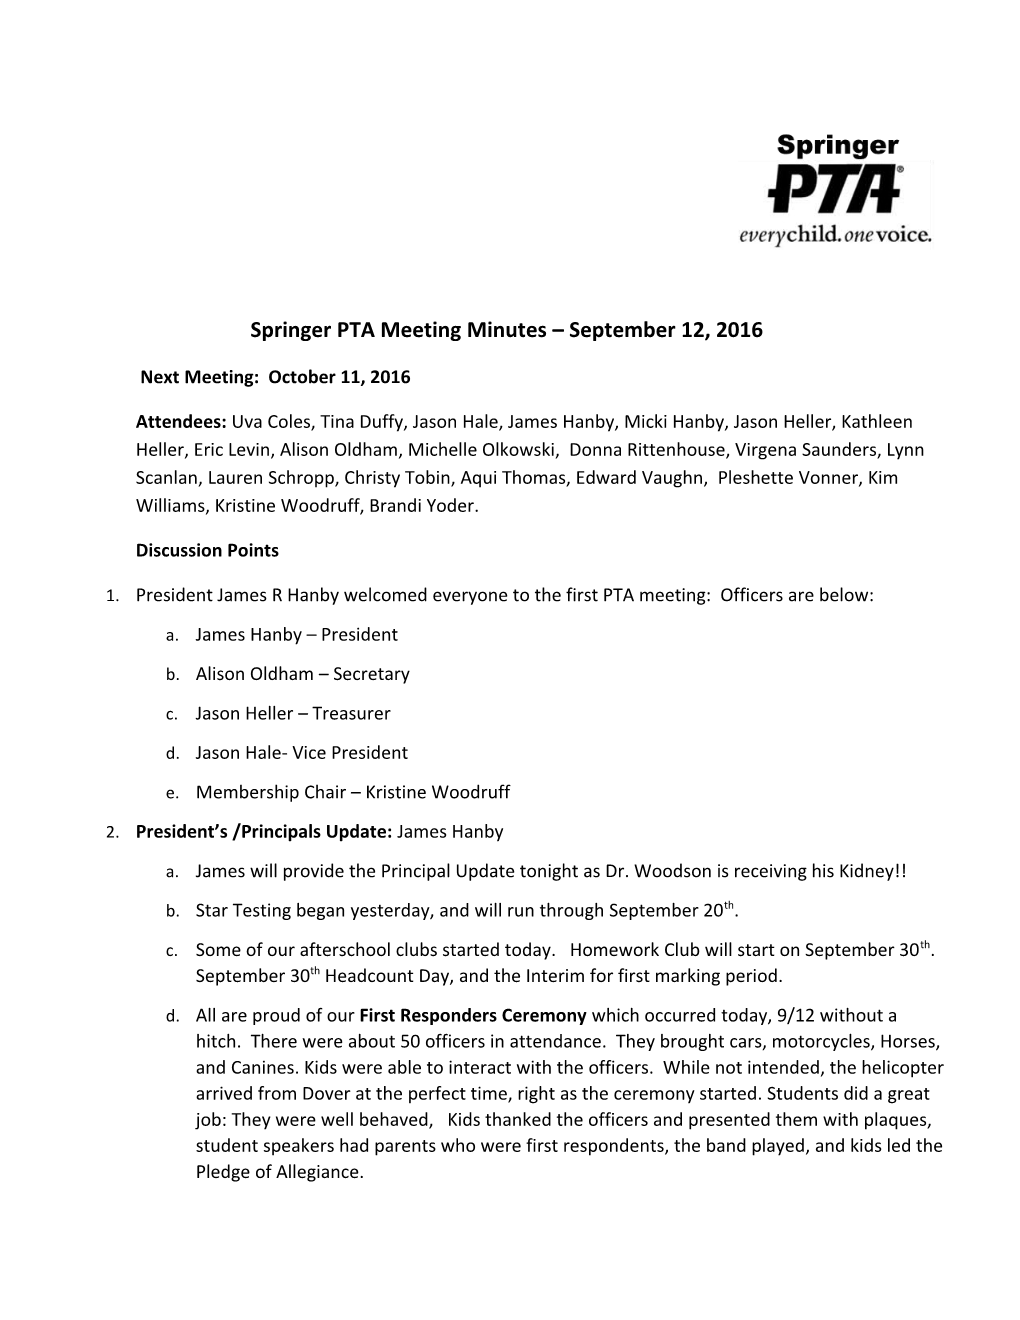 Springer PTA Meeting Minutes September 12, 2016